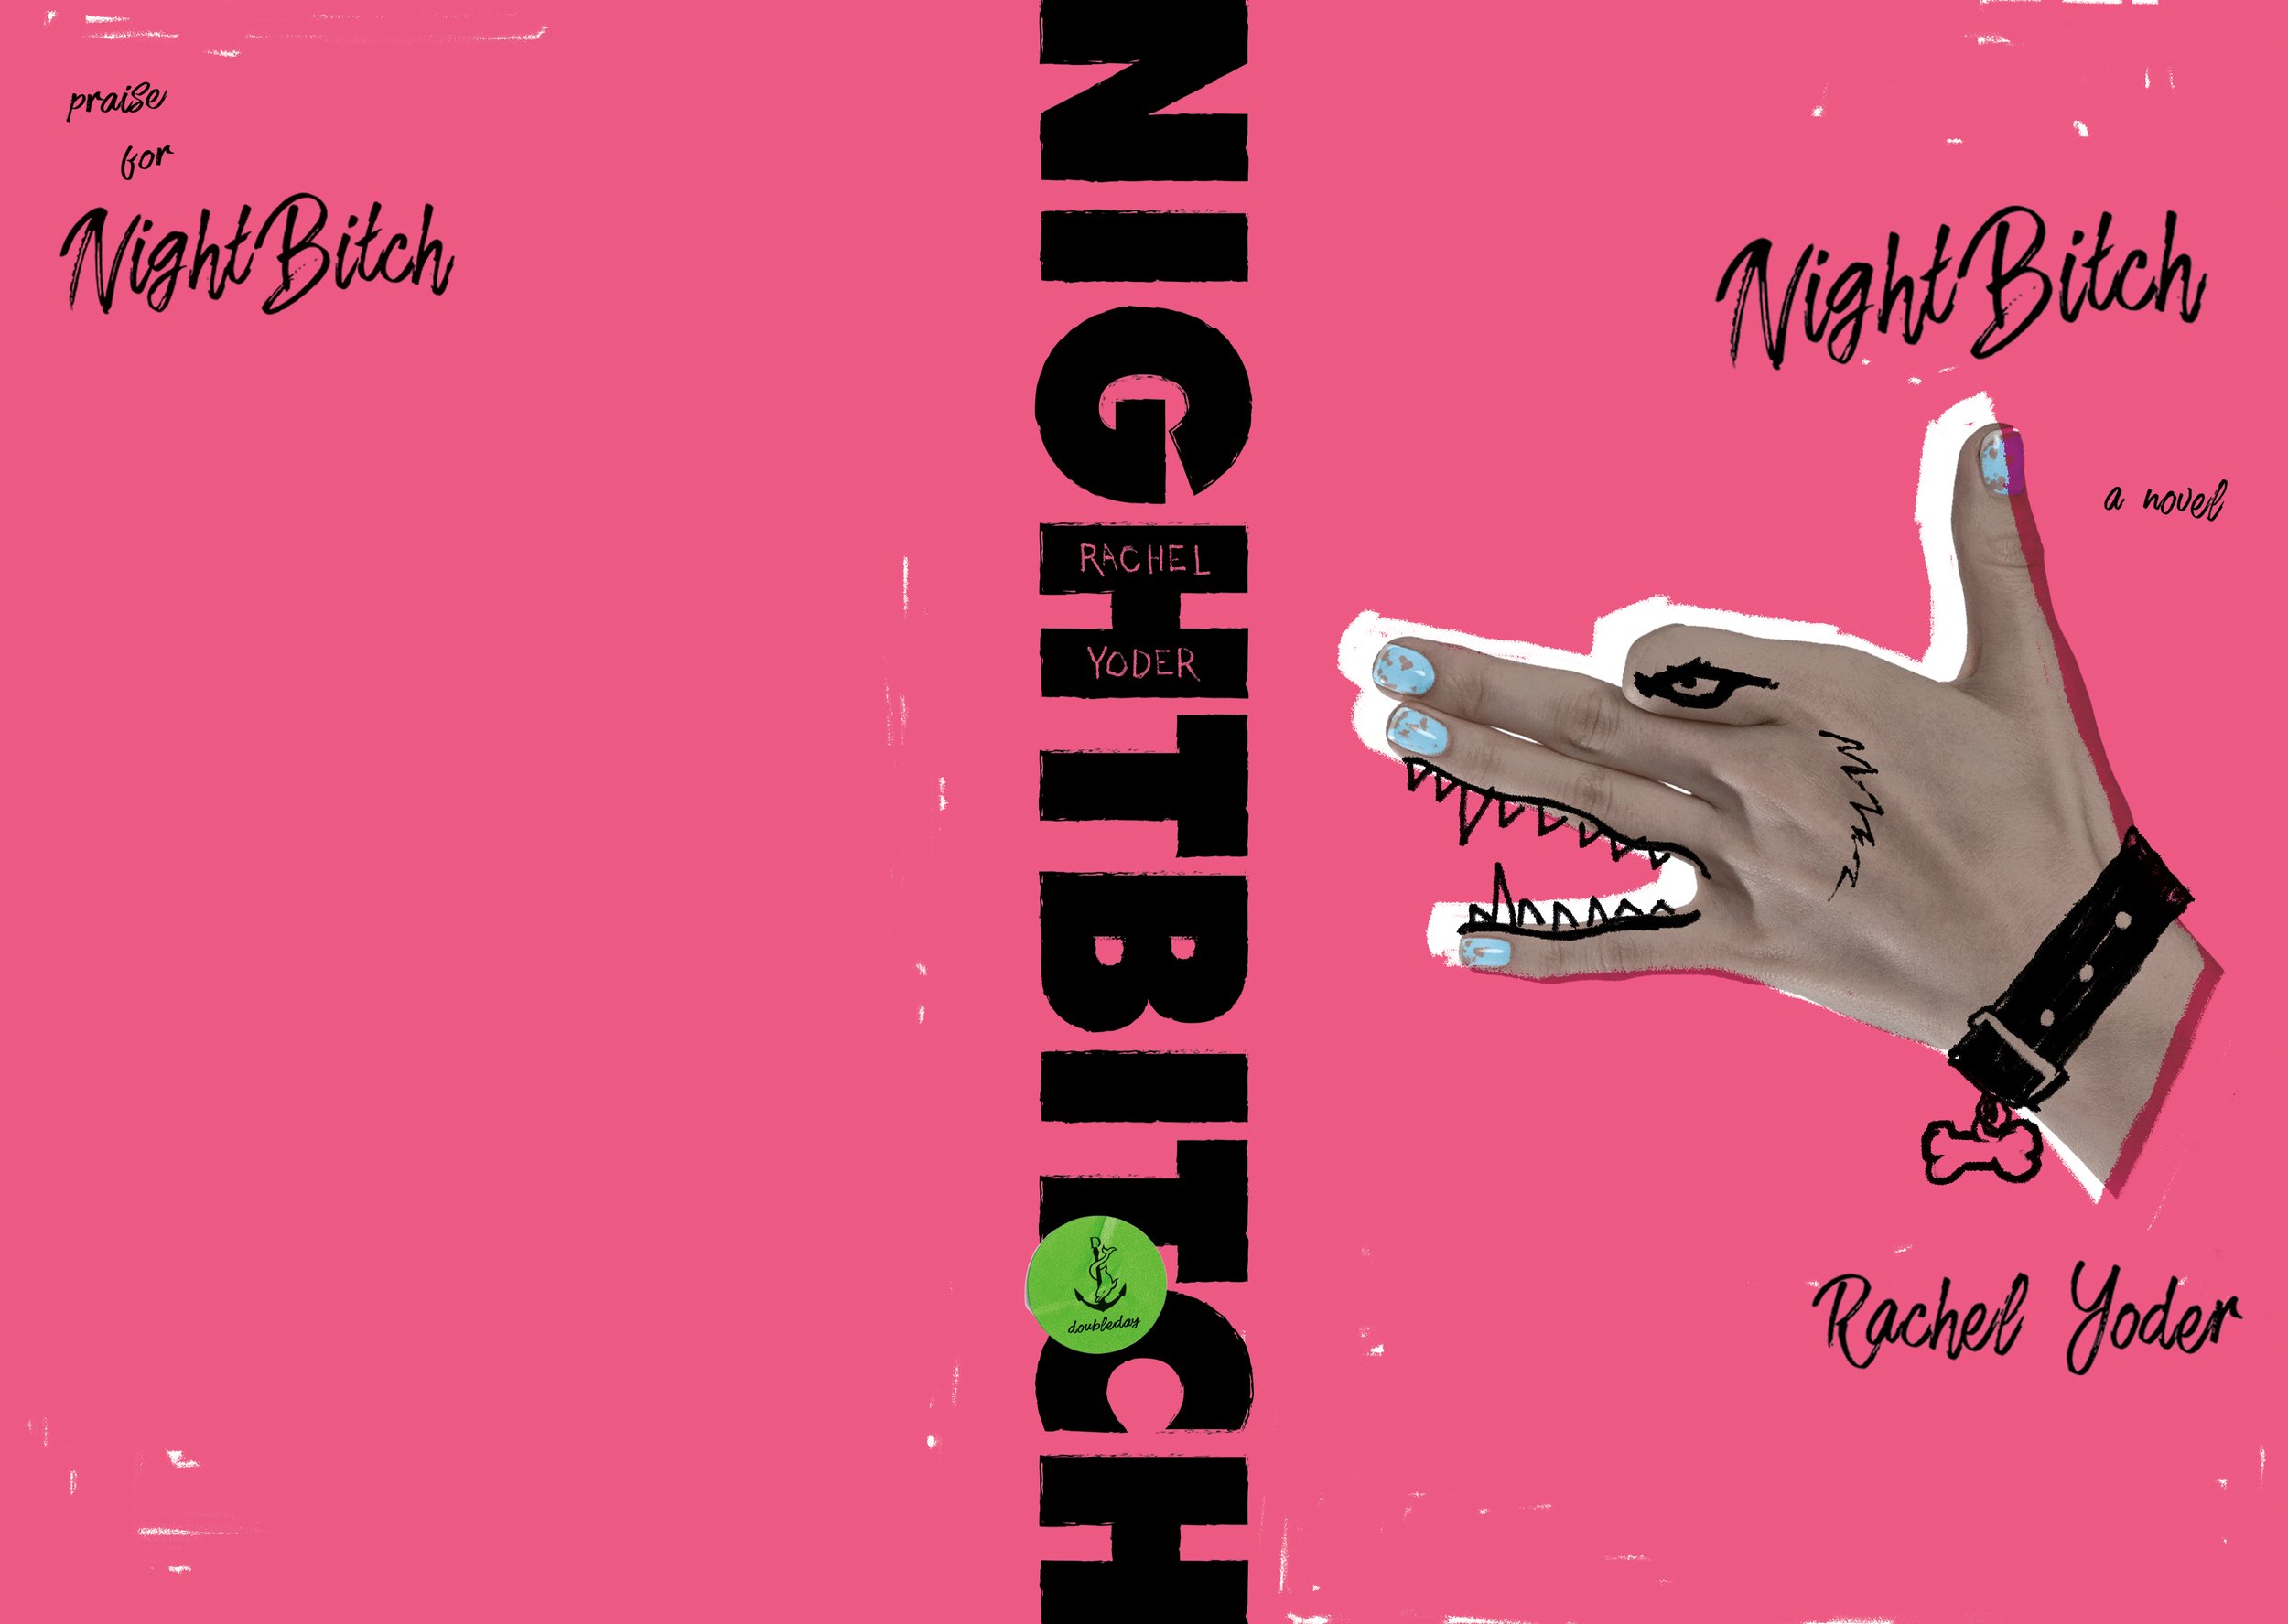 NightBitch art new 5c.jpg